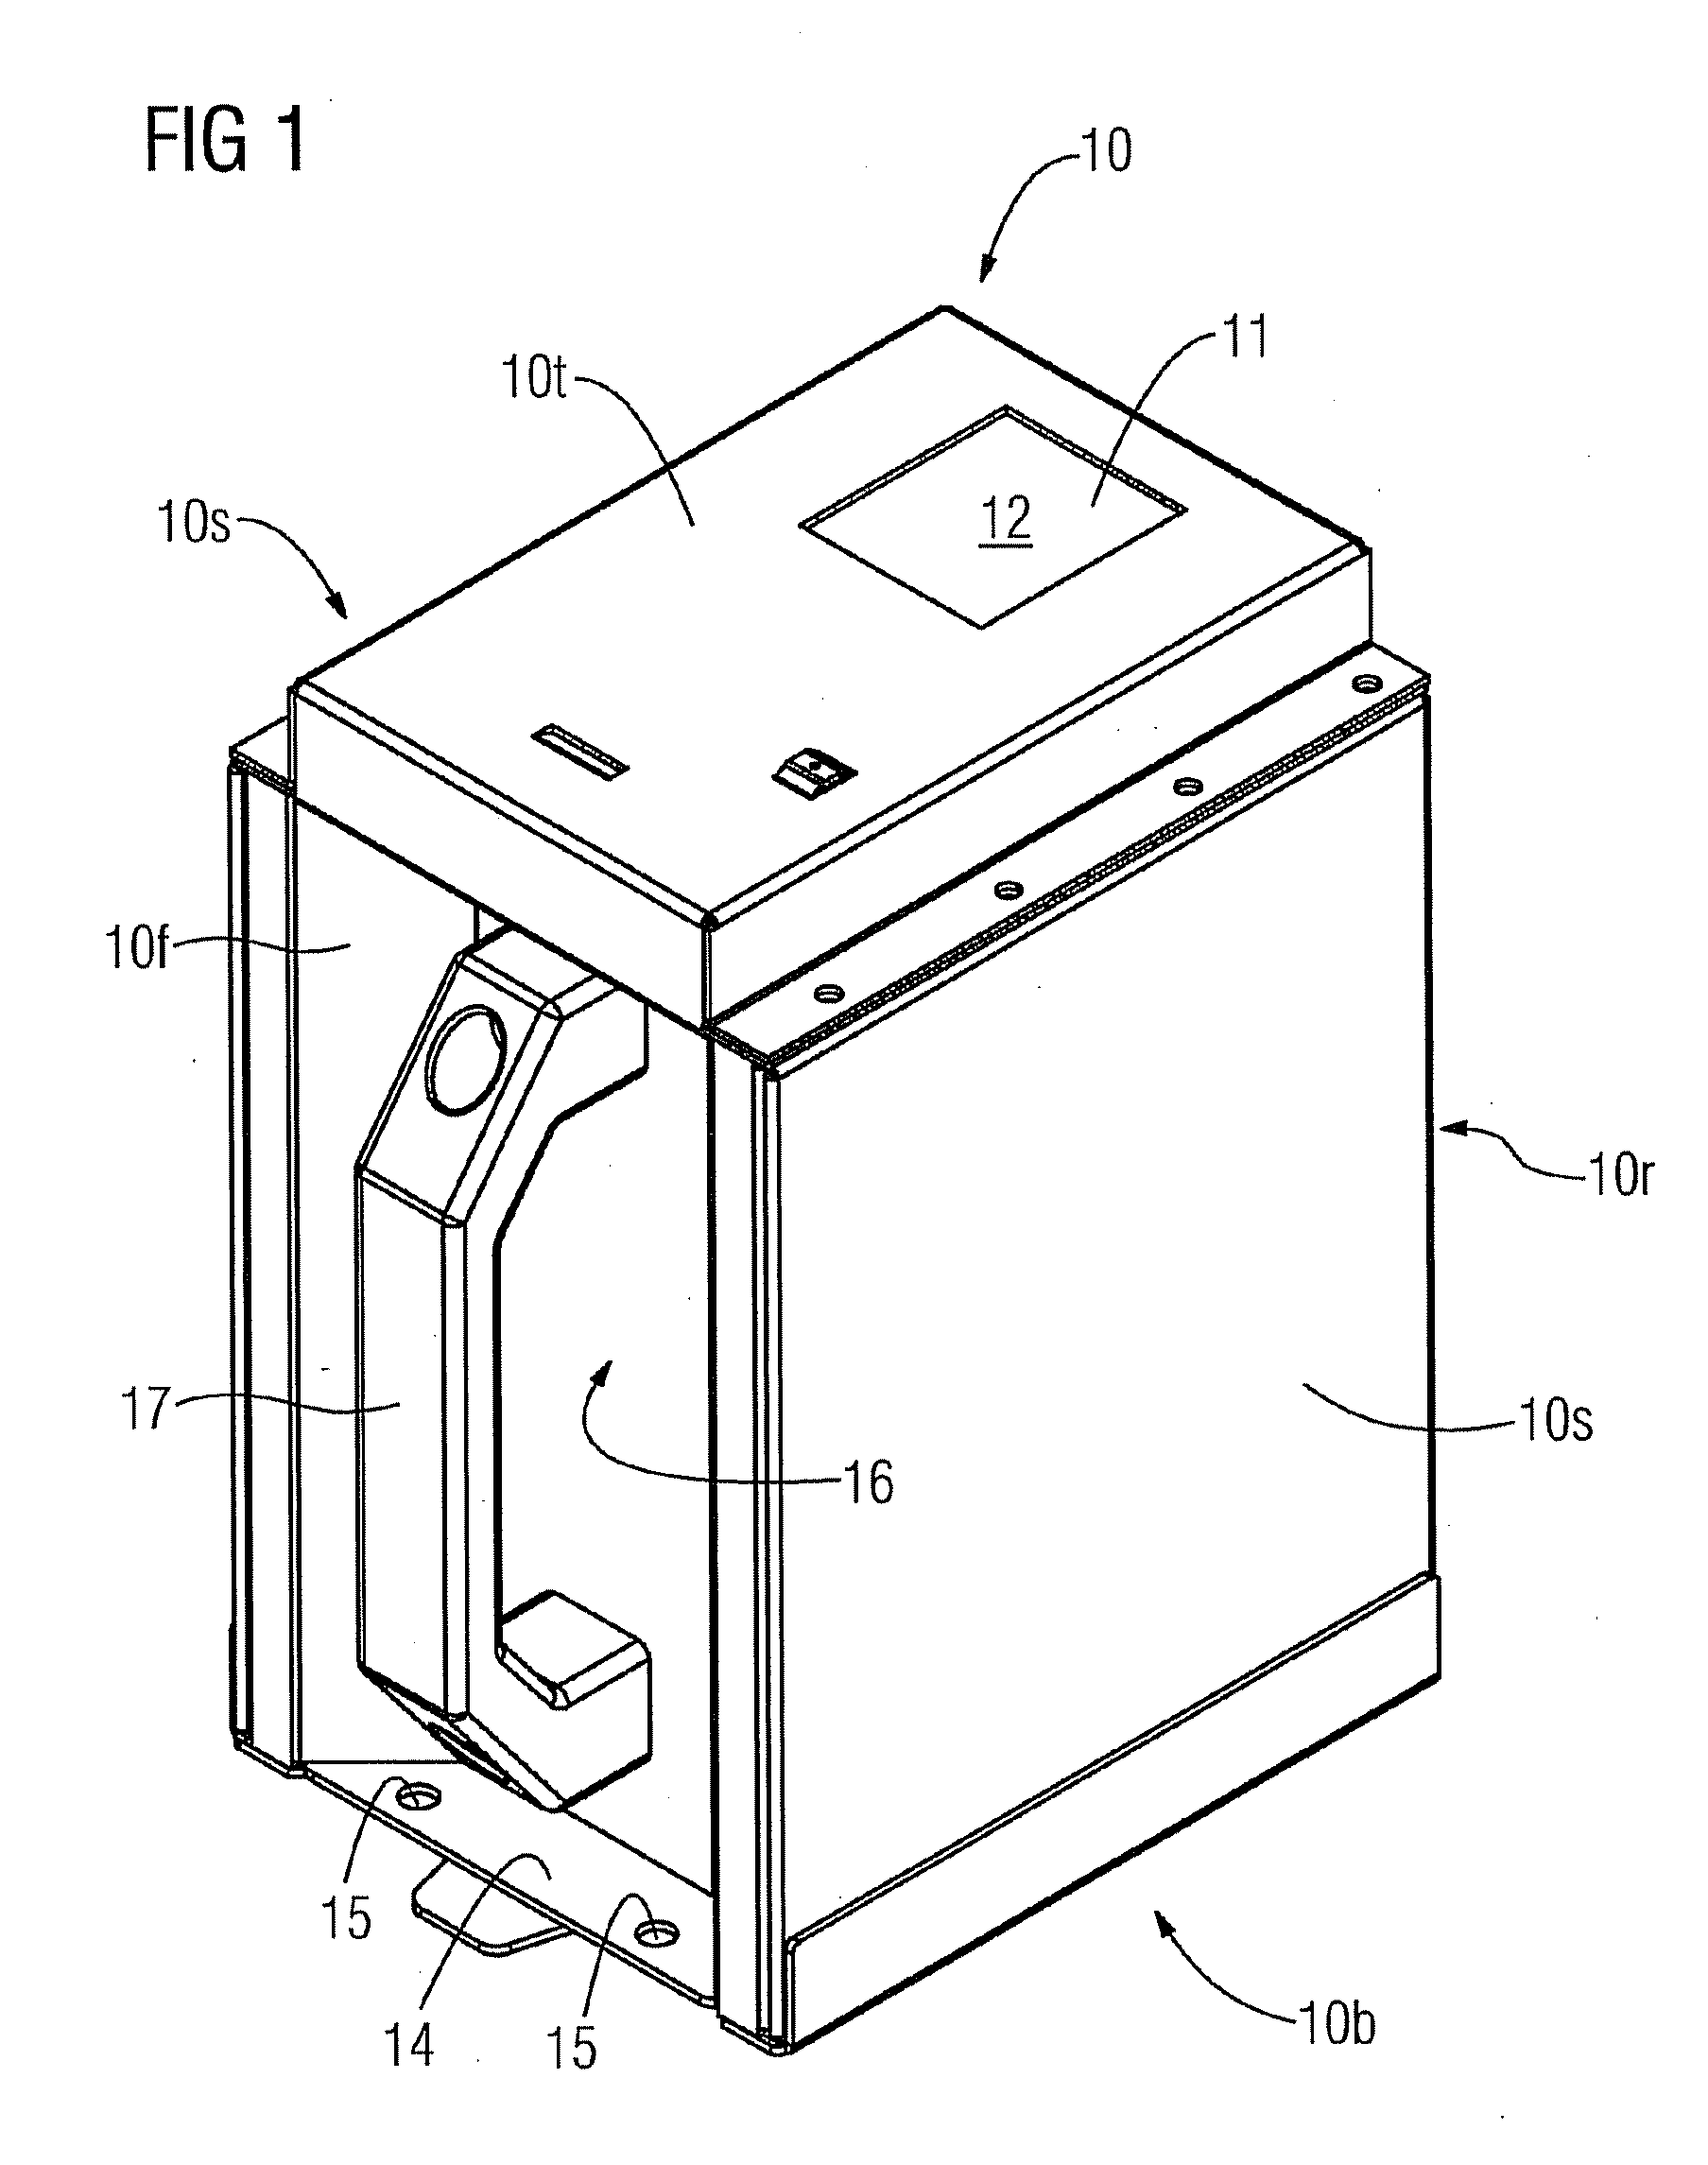 Cash box system for a vending machine